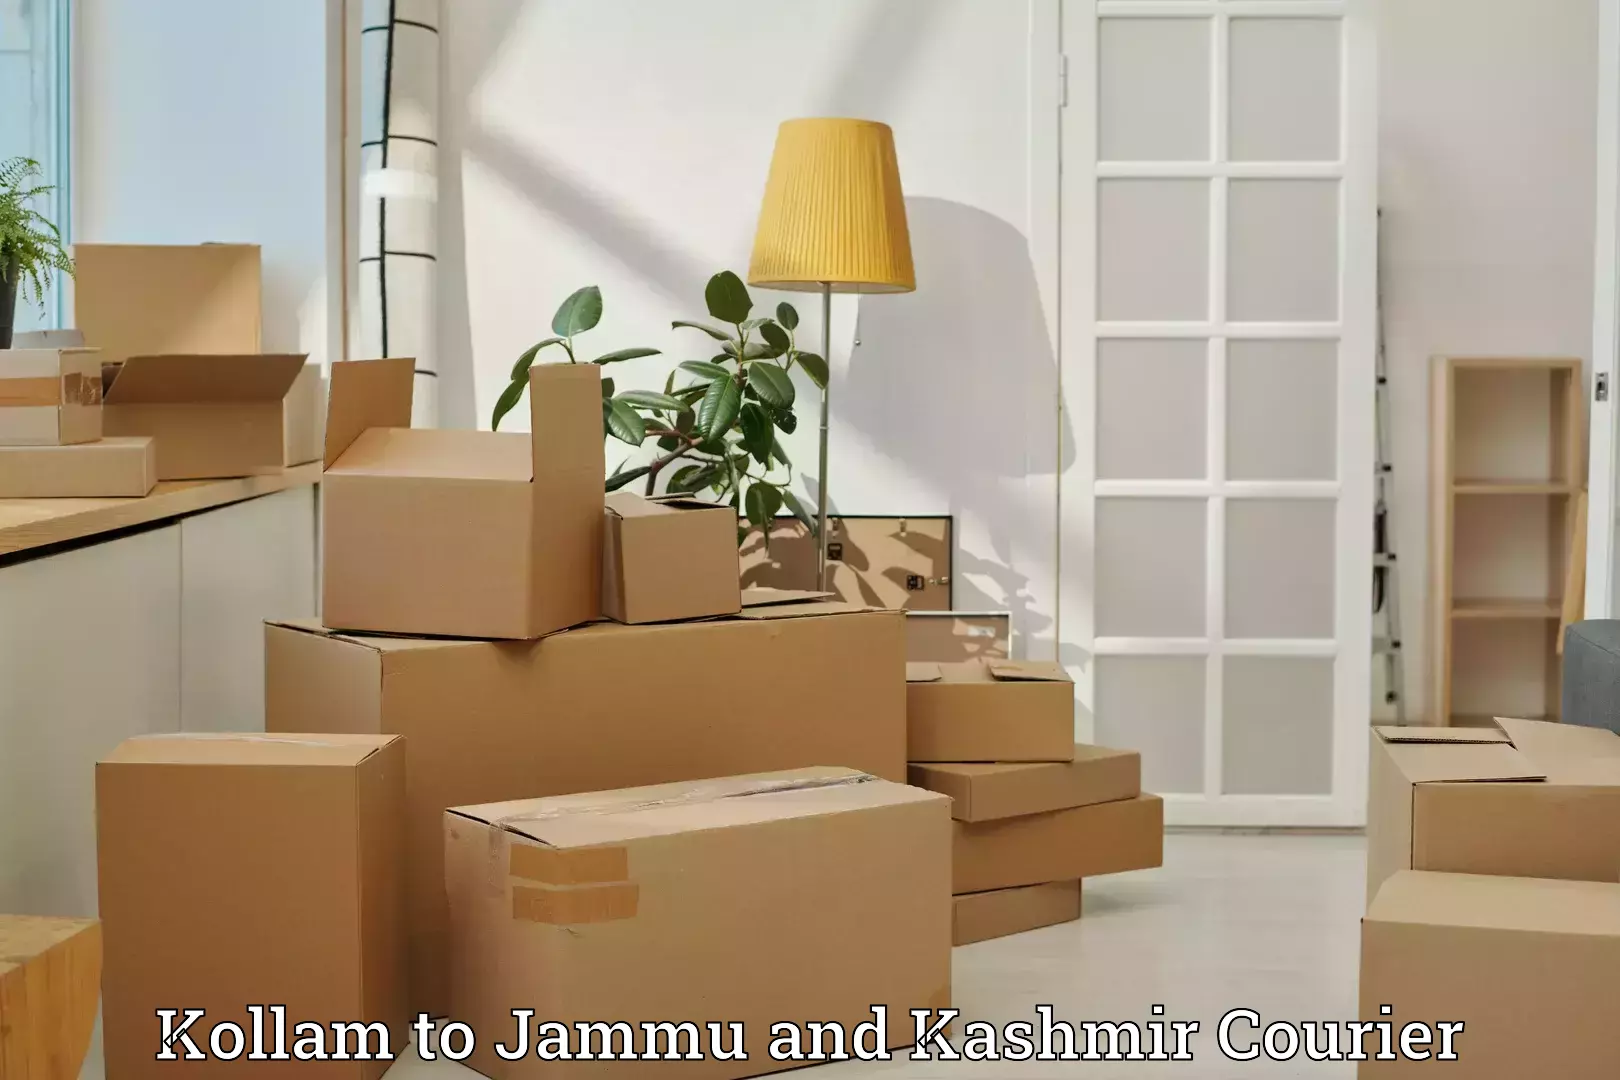 Luggage shipment specialists Kollam to Jammu and Kashmir